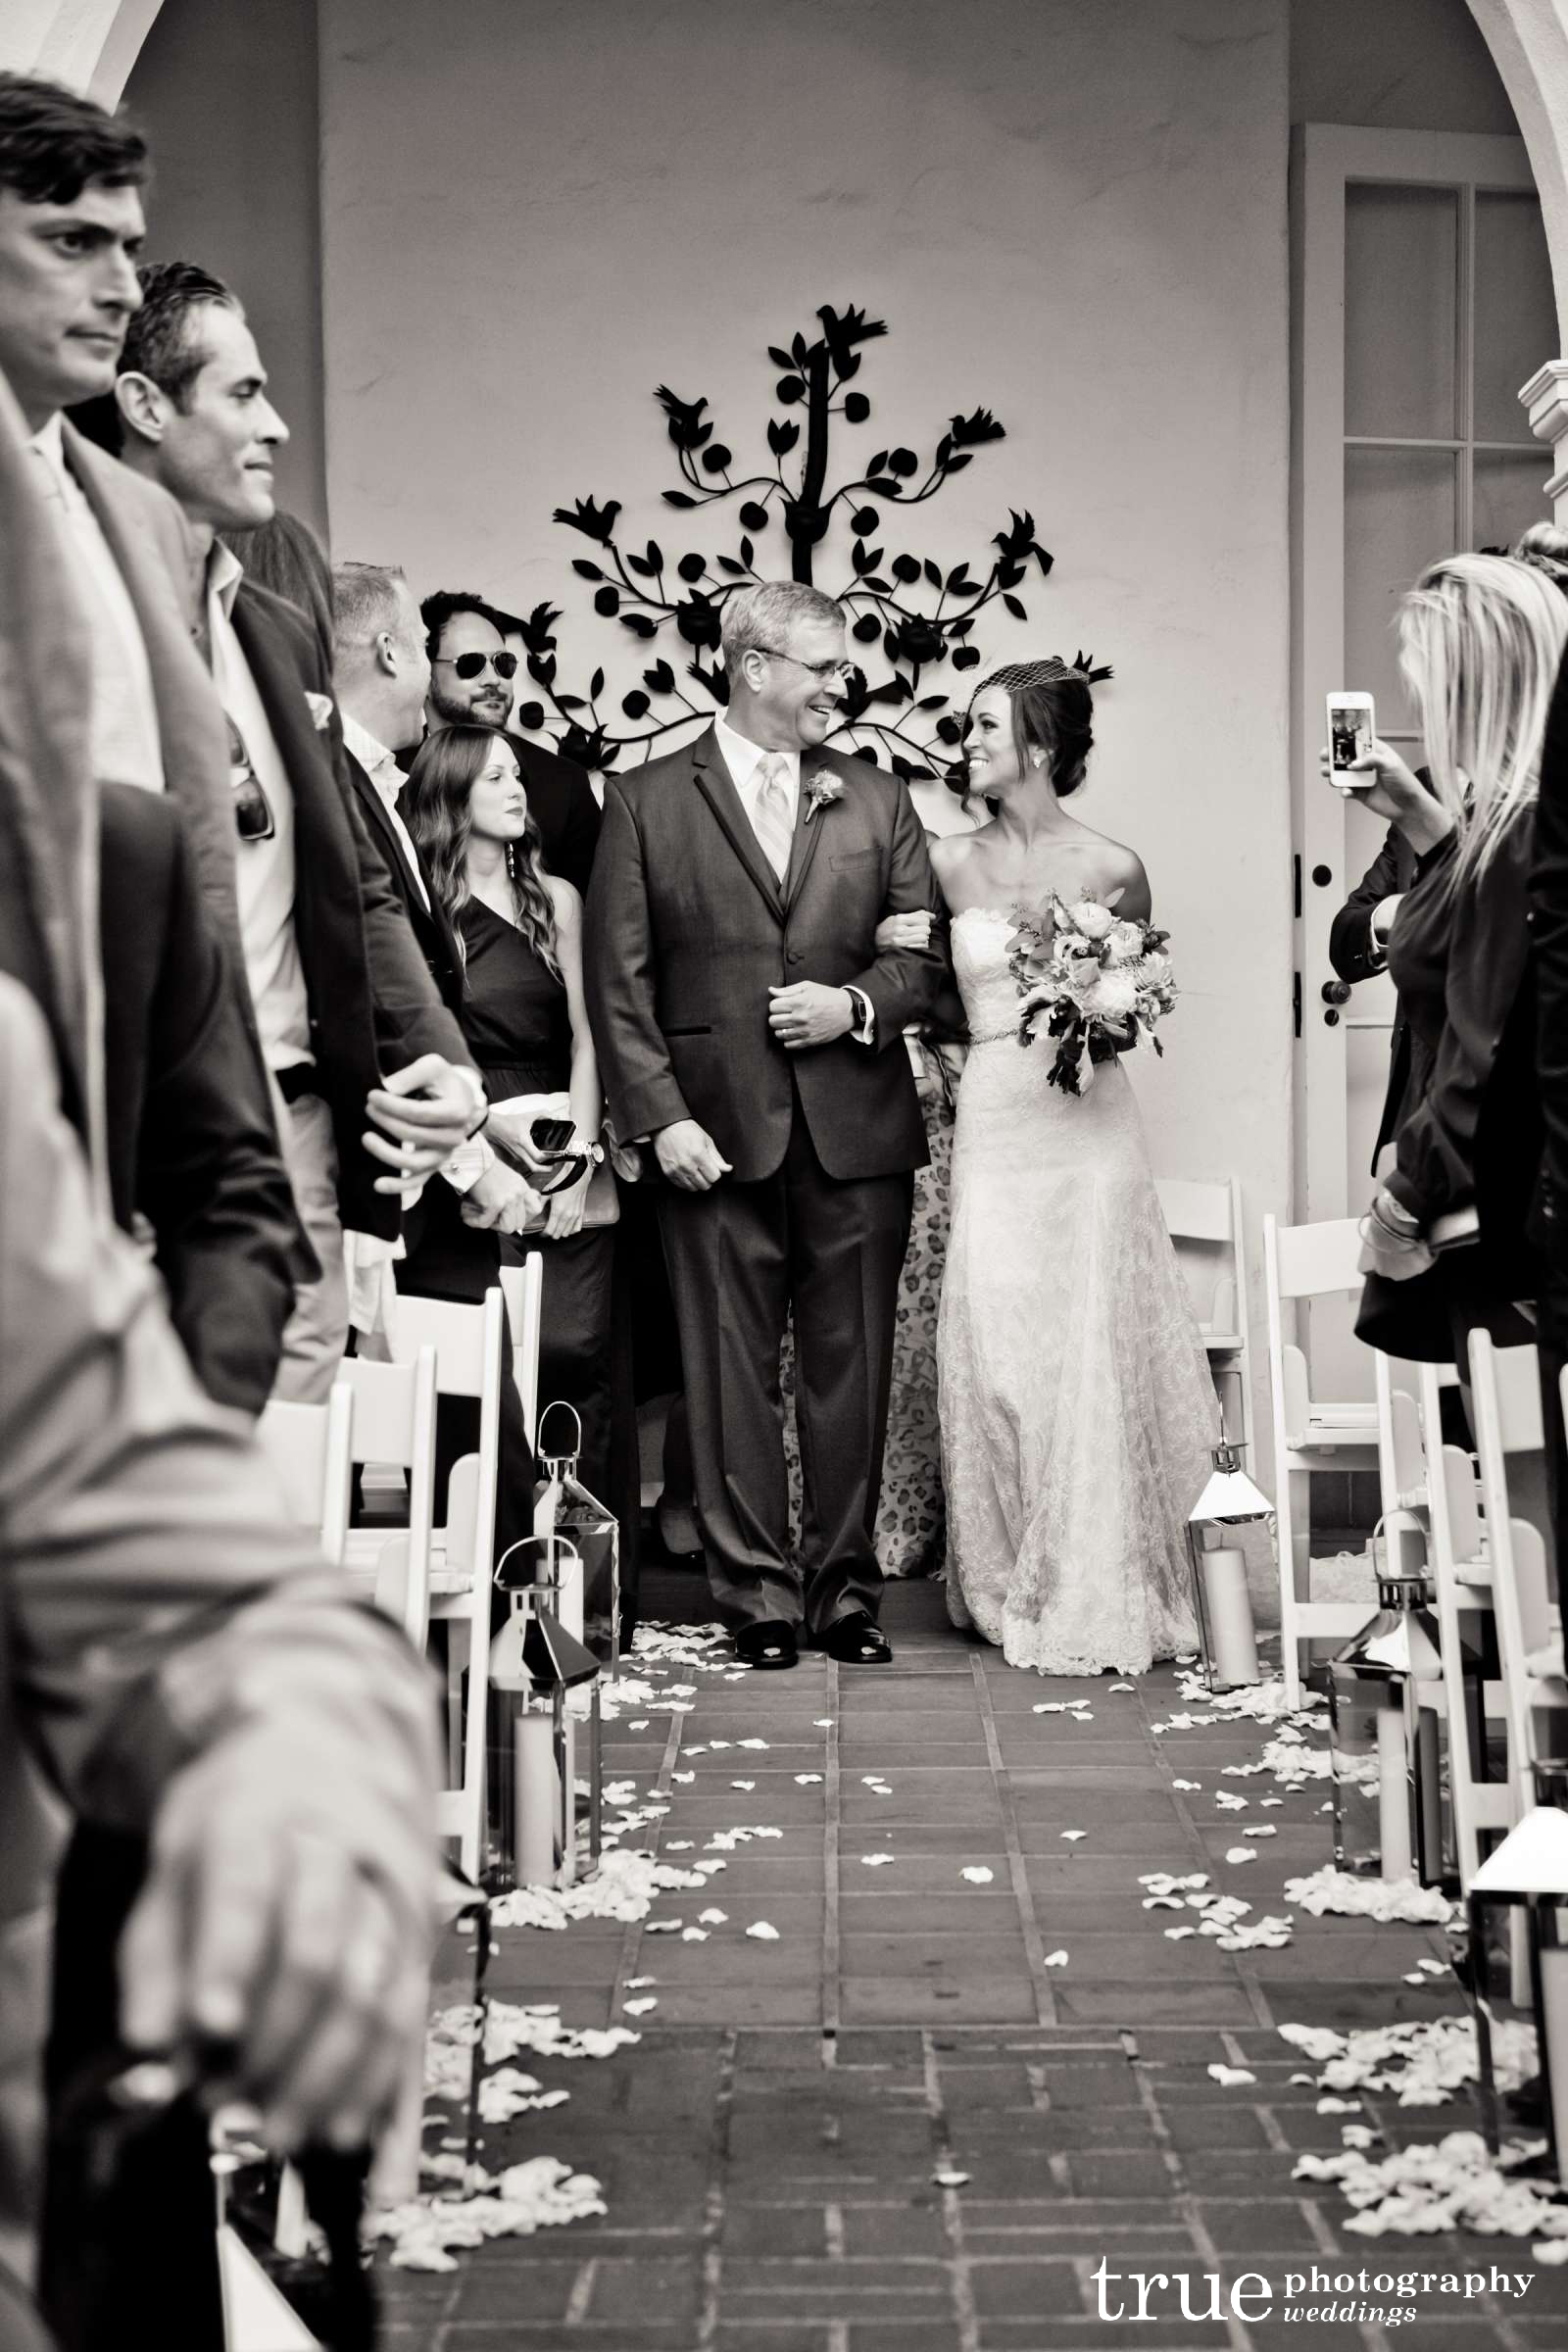 CJ + Ashley | True Photography Weddings | Darlington House | San Diego Catering ...1600 x 2400